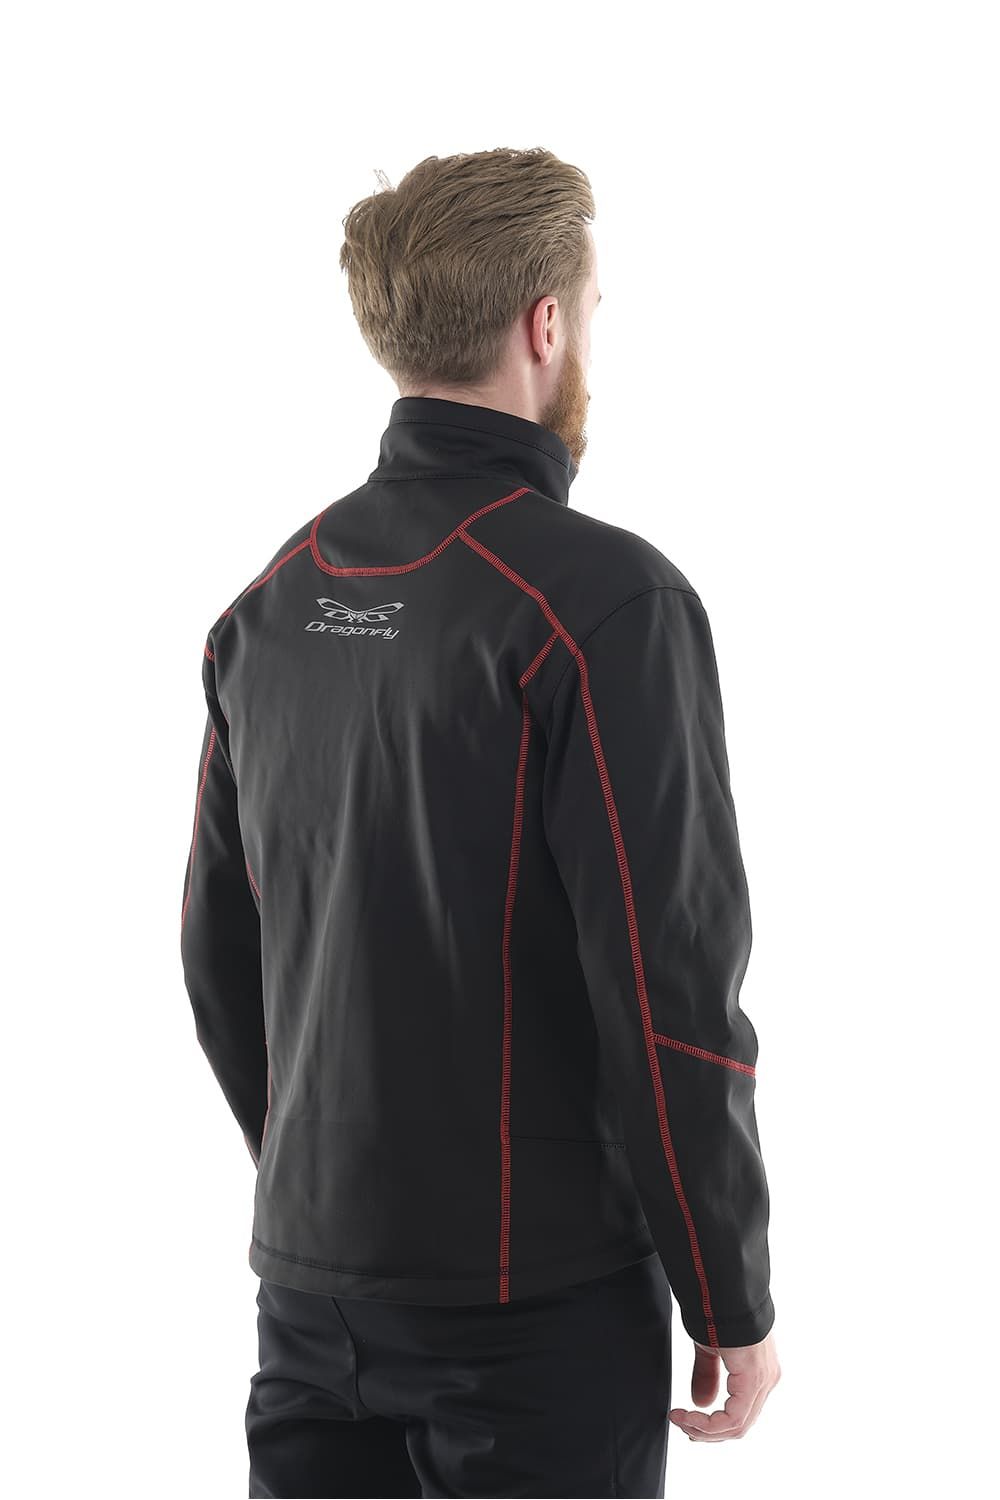 Куртка Explorer Black-Red  мужская, Softshell в интернет-магазине Мотомода